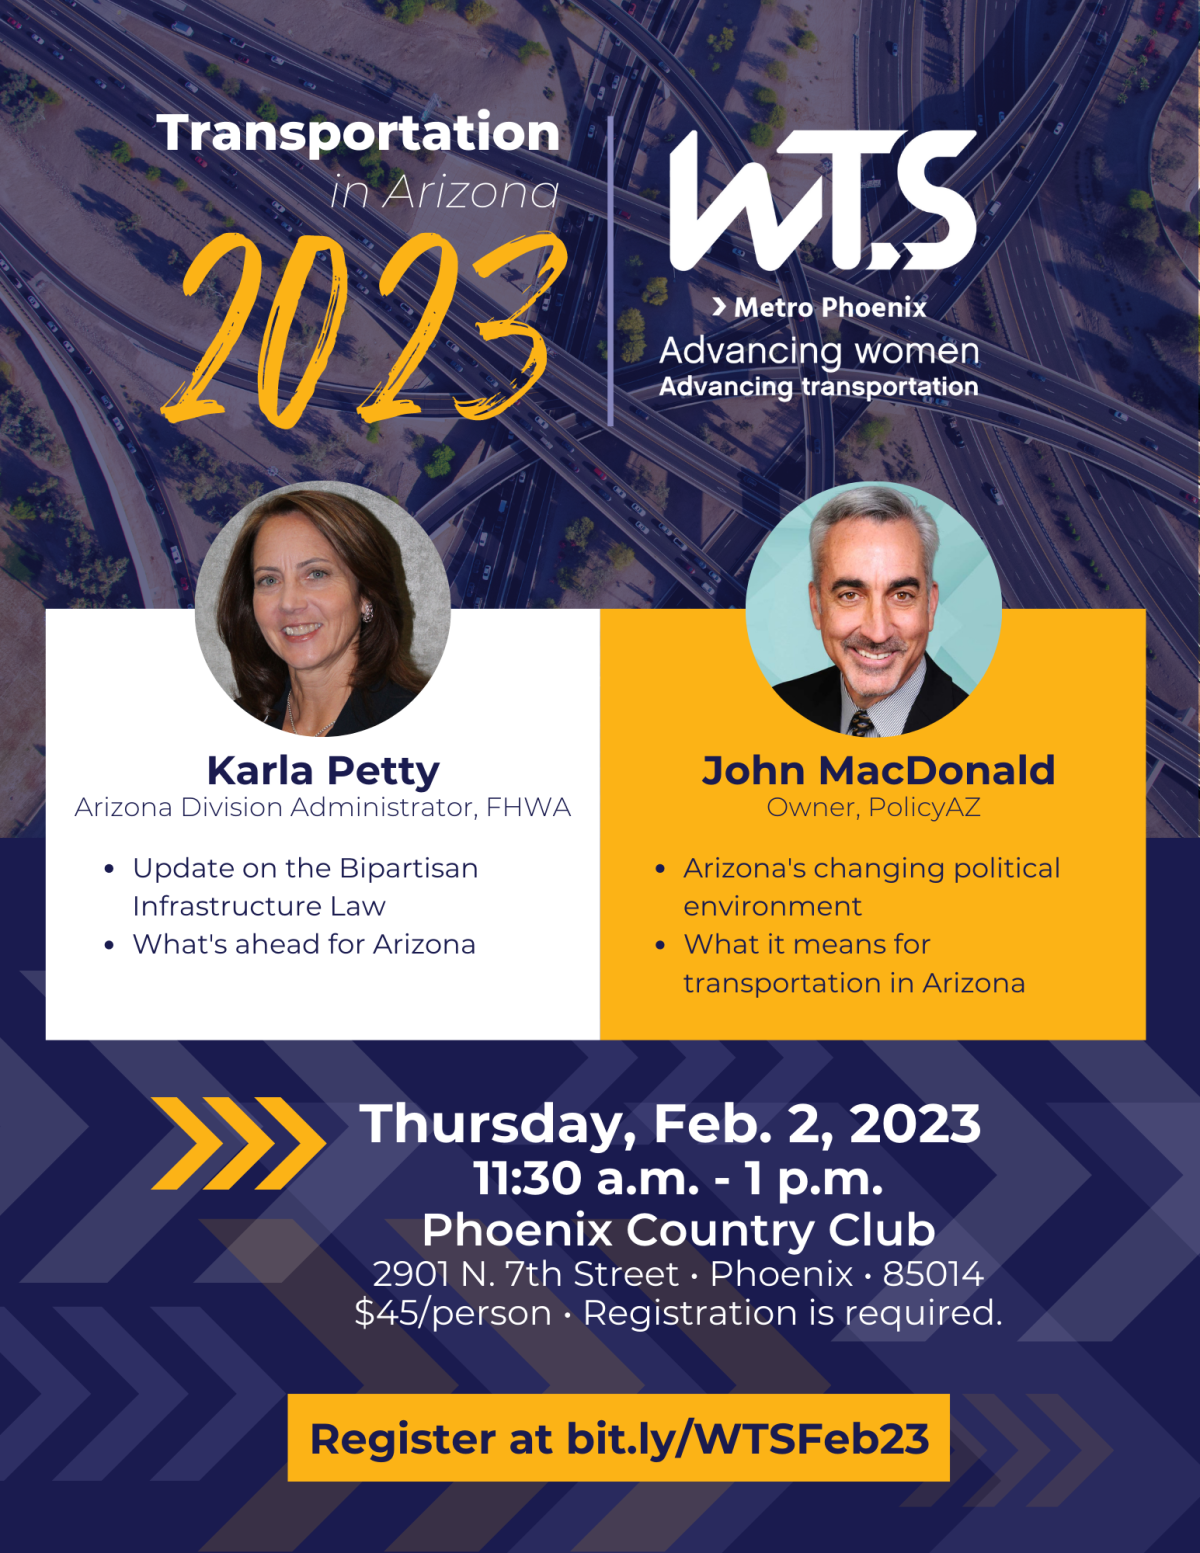 WTS Metro Phoenix presents Transportation in Arizona 2023 with speakers Karla Petty and John MacDonald on Thurs Feb 2 at 11:30 a.m.